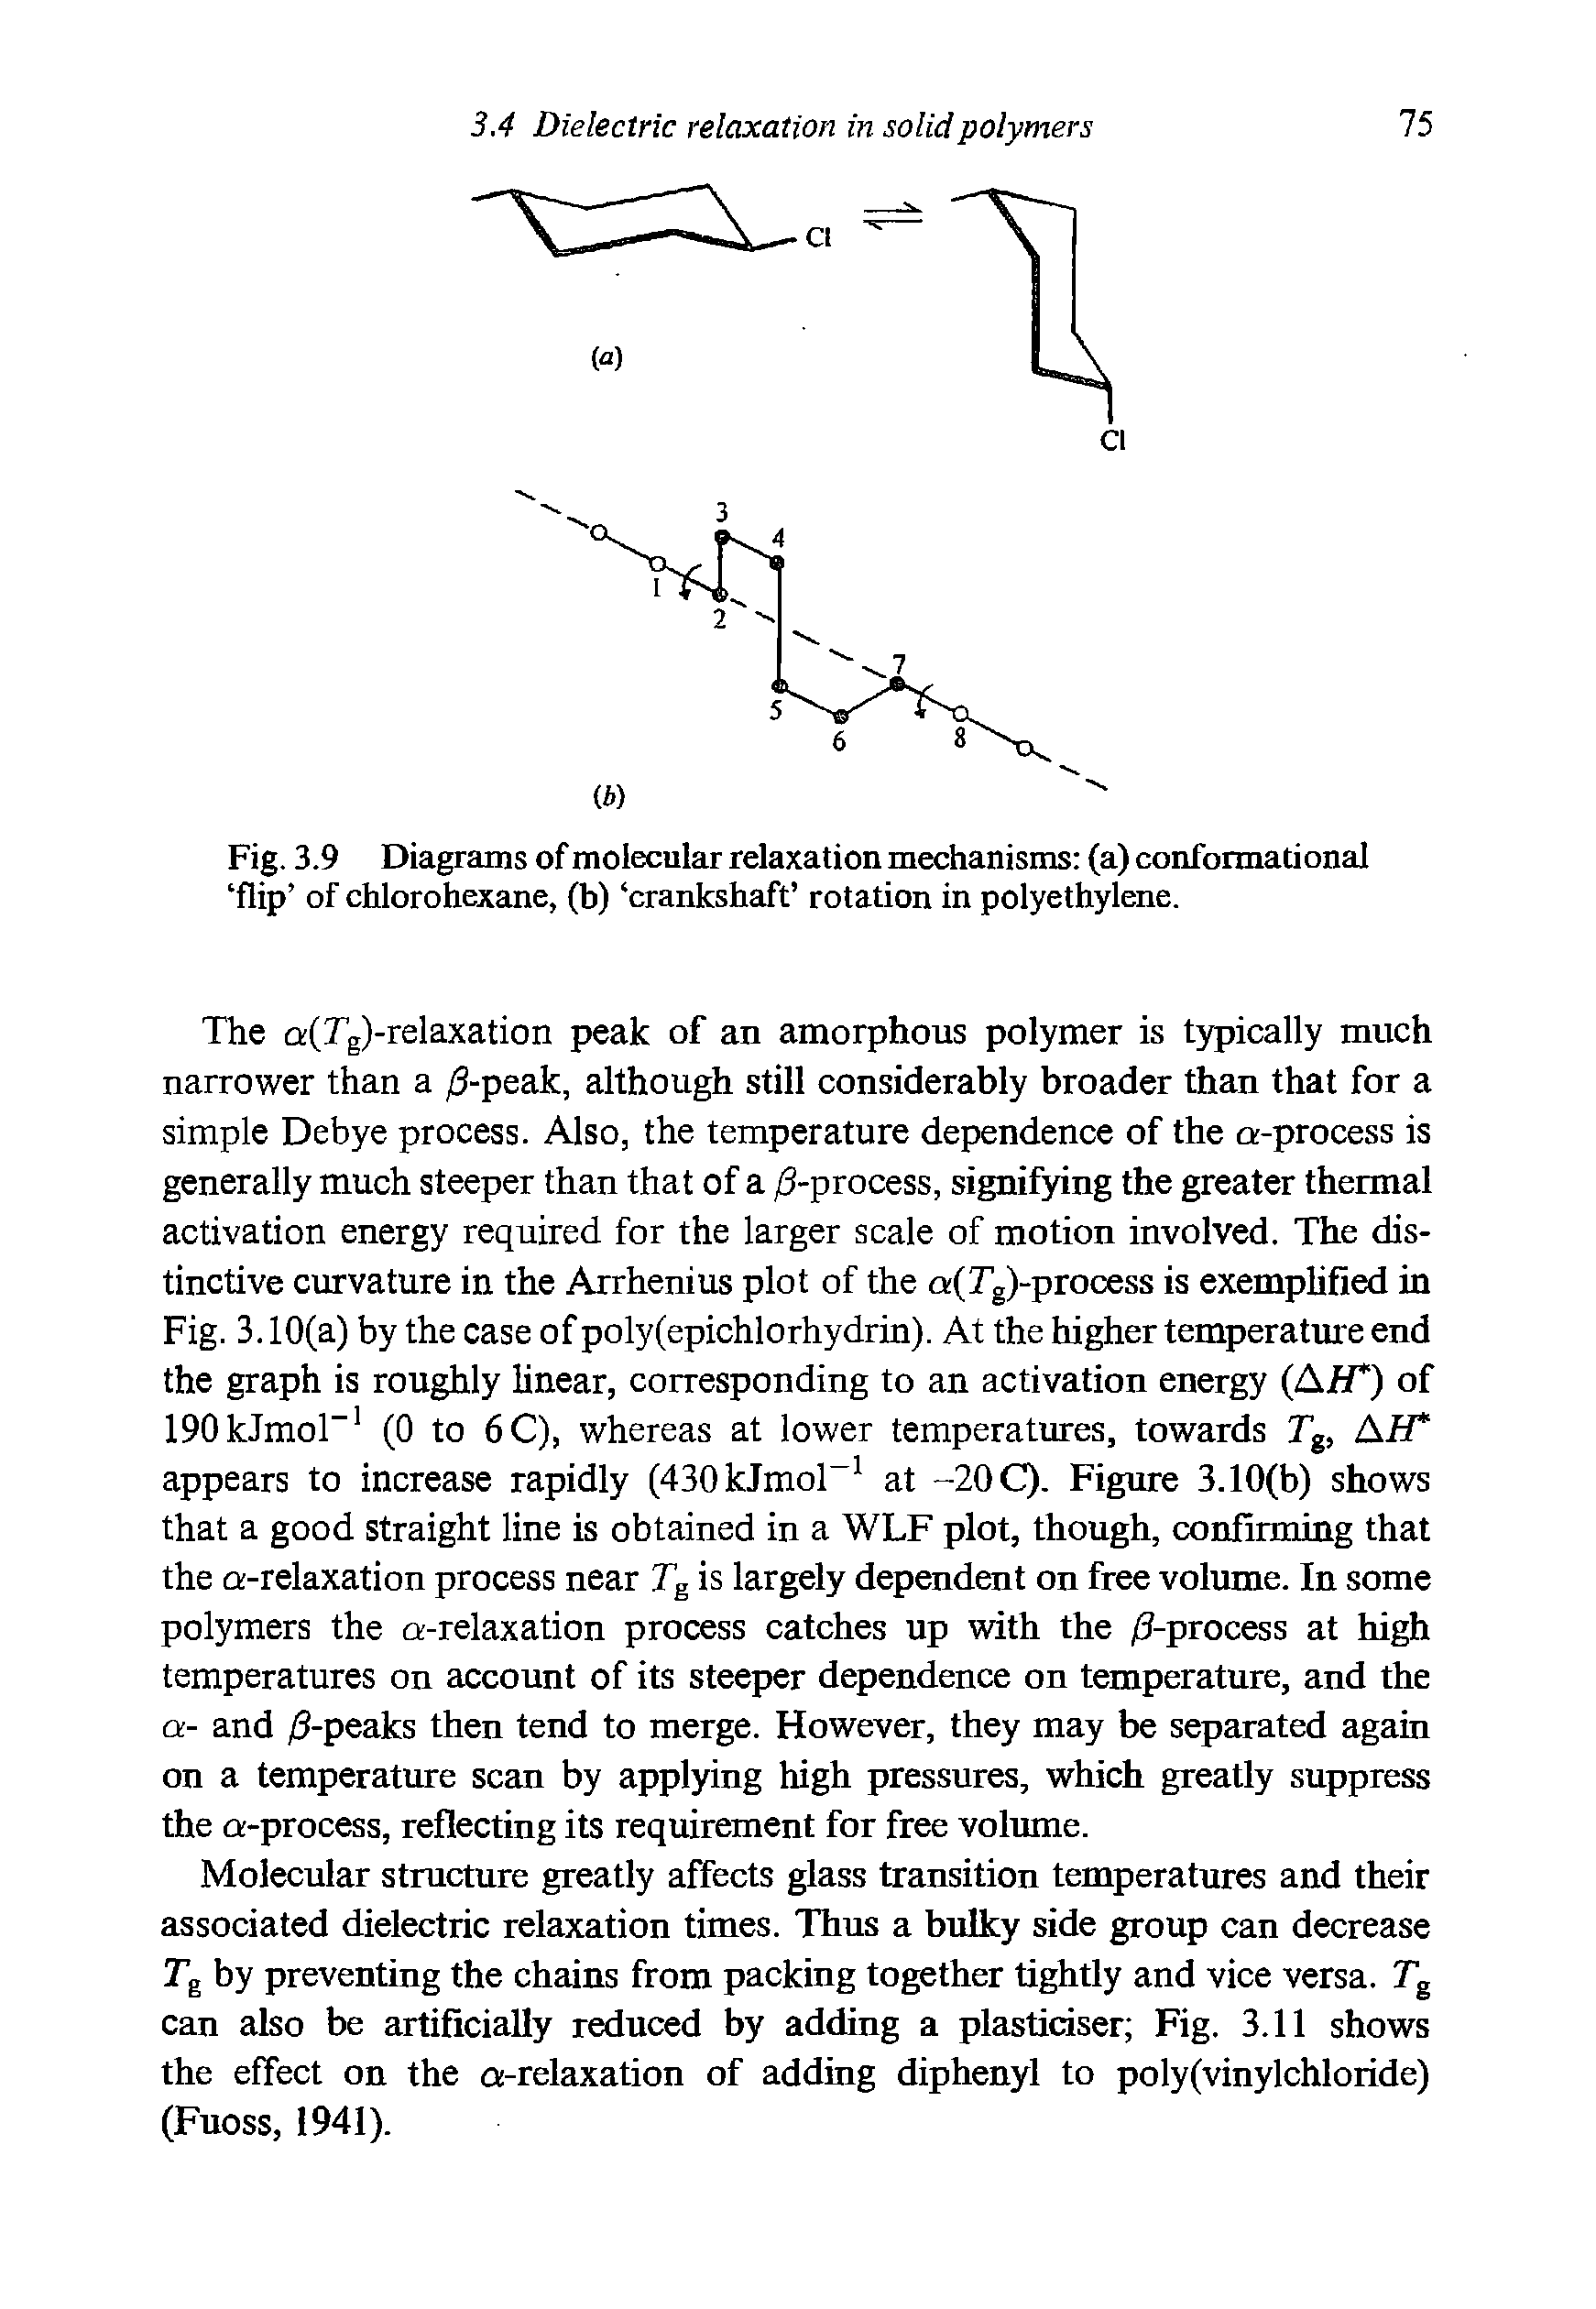 Fig. 3.9 Diagrams of molecular relaxation mechanisms (a) conformational flip of chlorohexane, (b) crankshaft rotation in polyethylene.